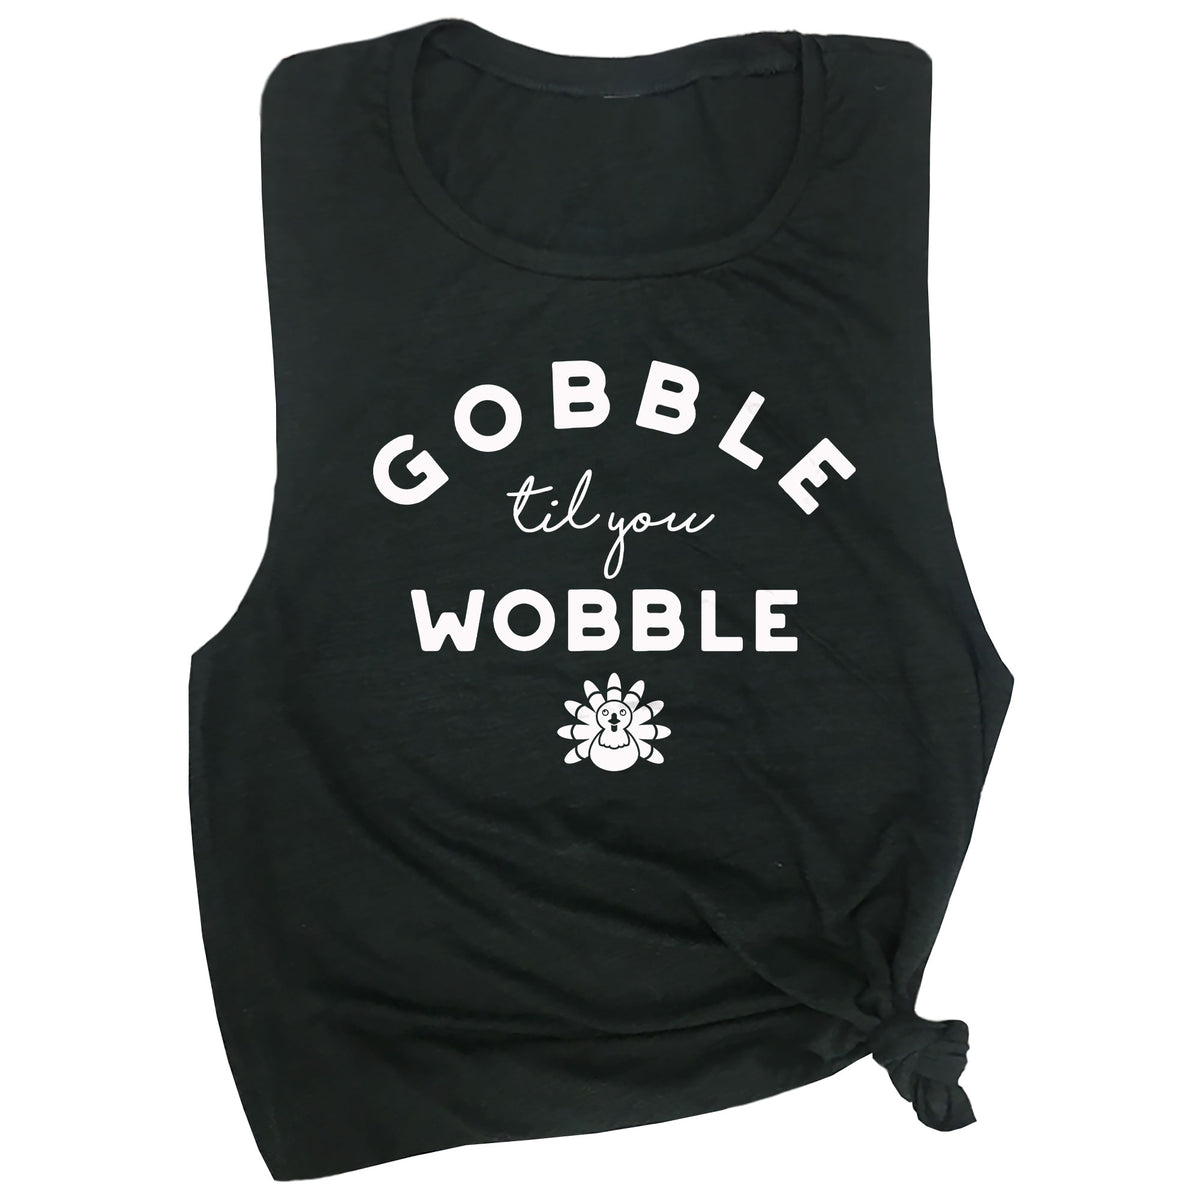 Gobble Til You Wobble Muscle Tee